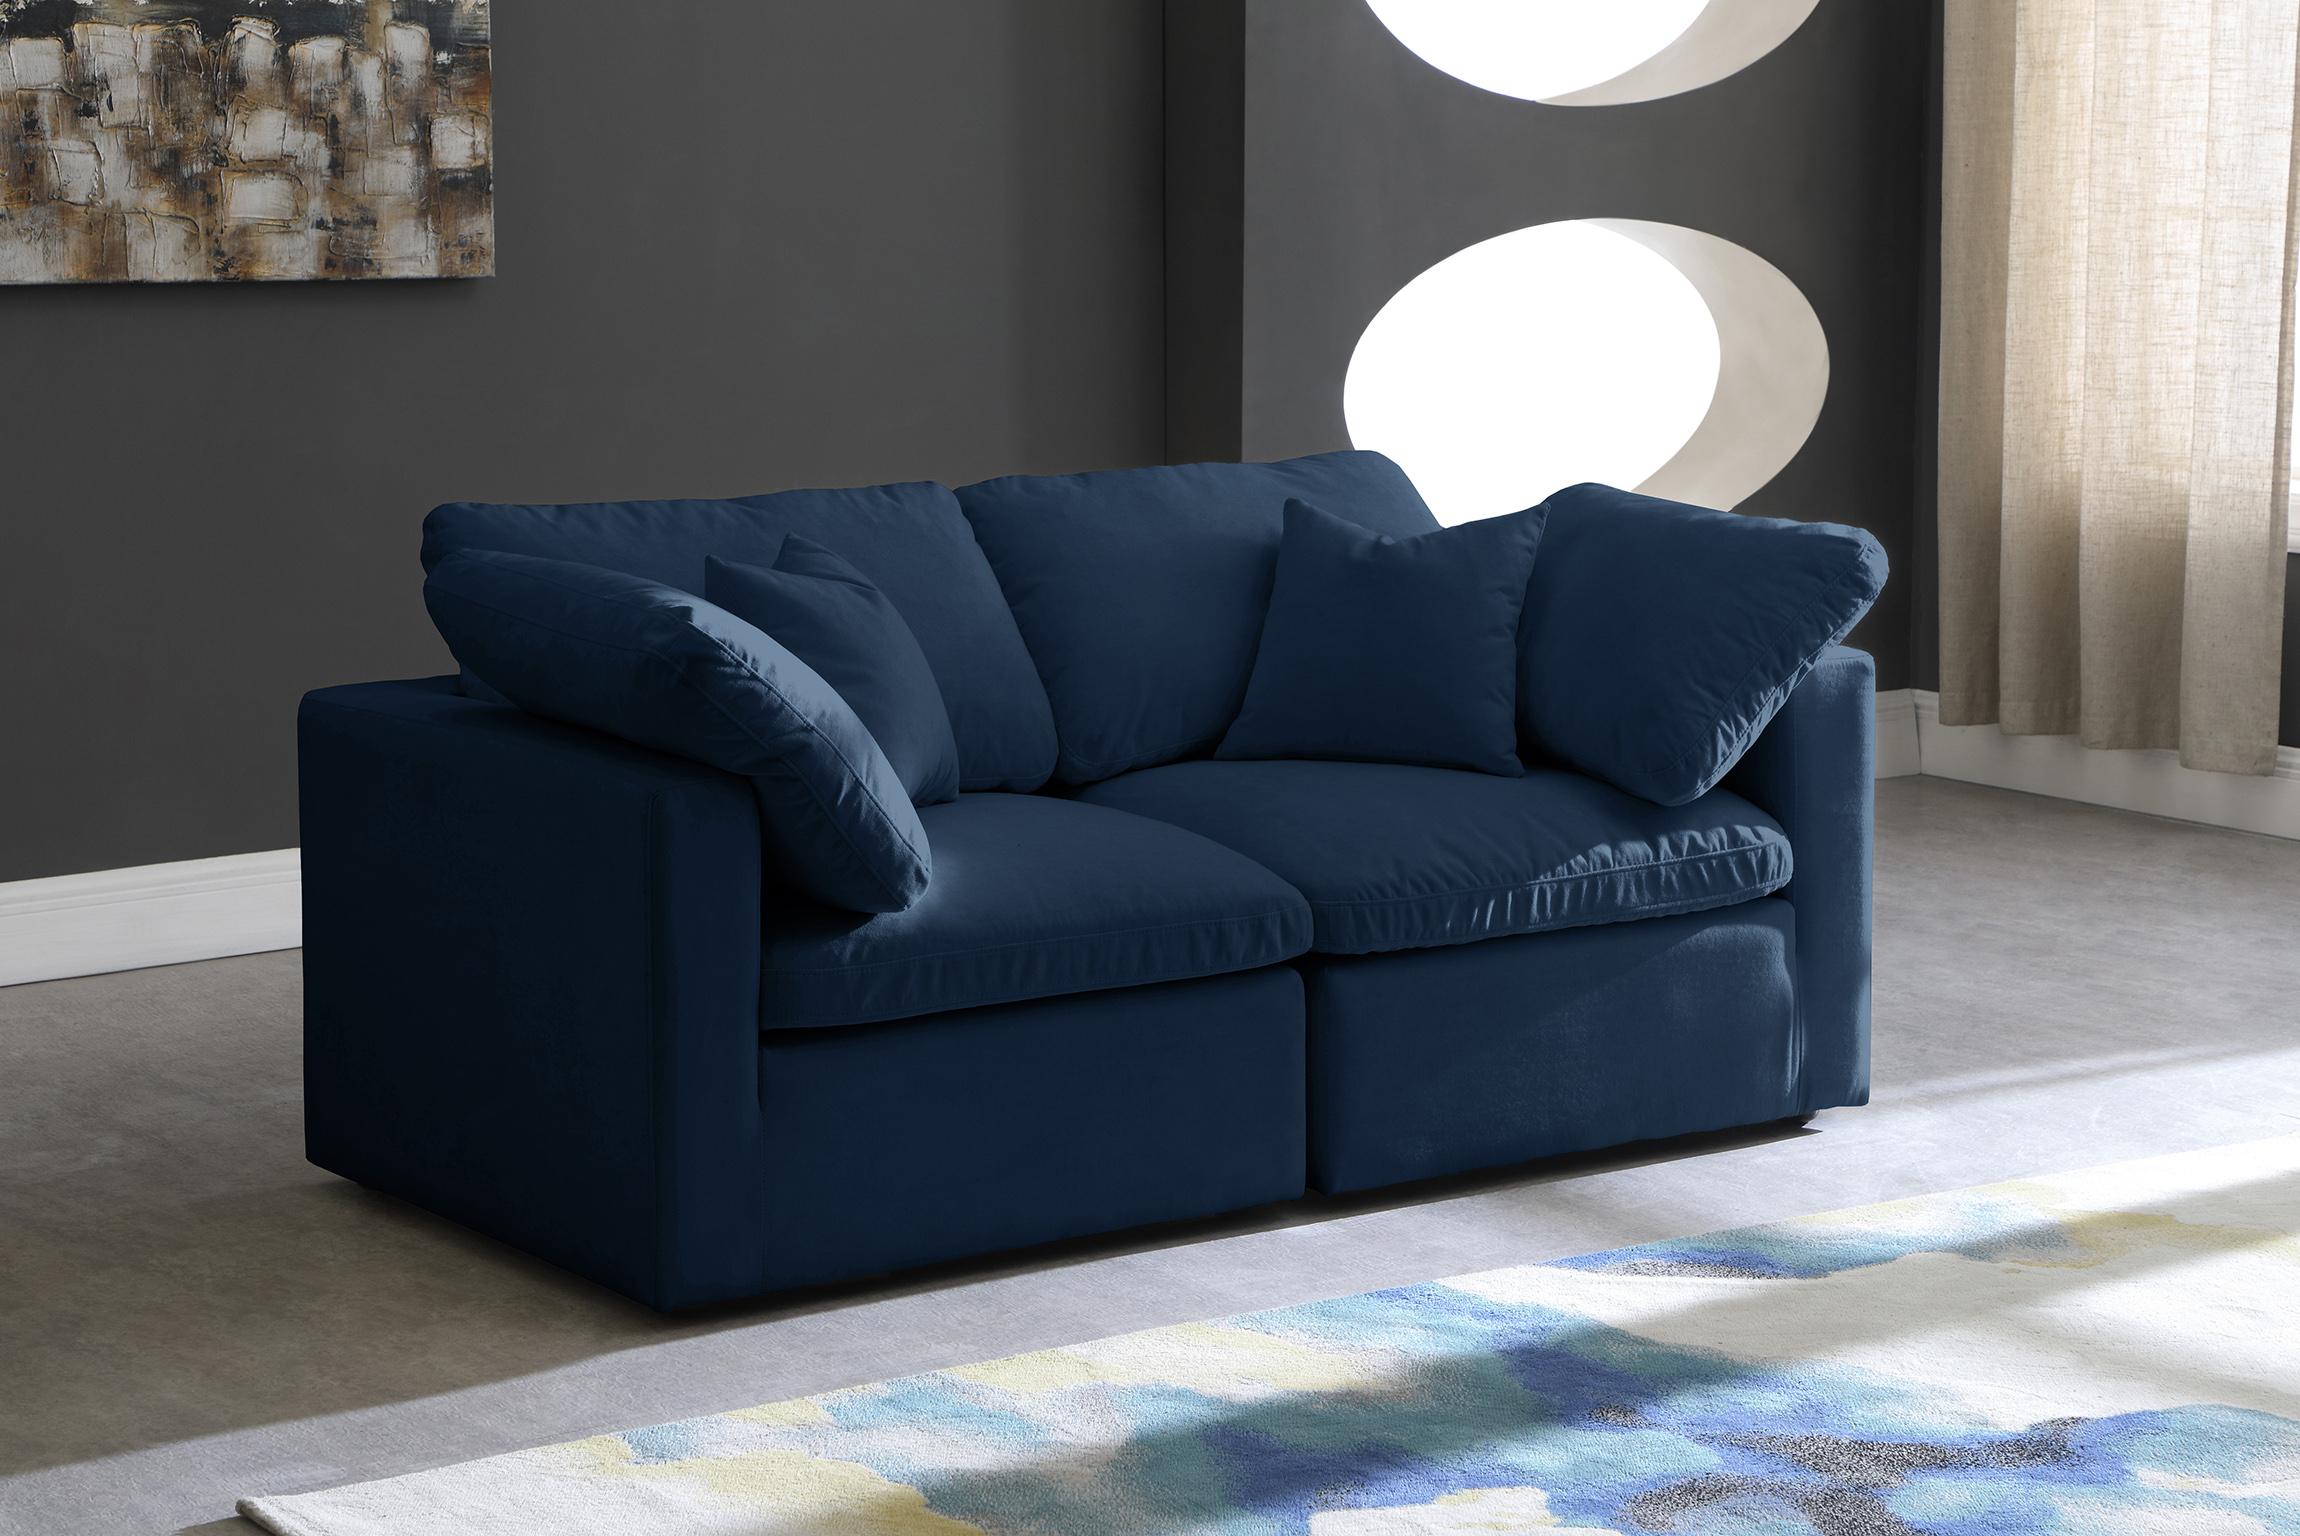 

                    
Soflex Cloud NAVY Modular Sofa Navy Fabric Purchase 
